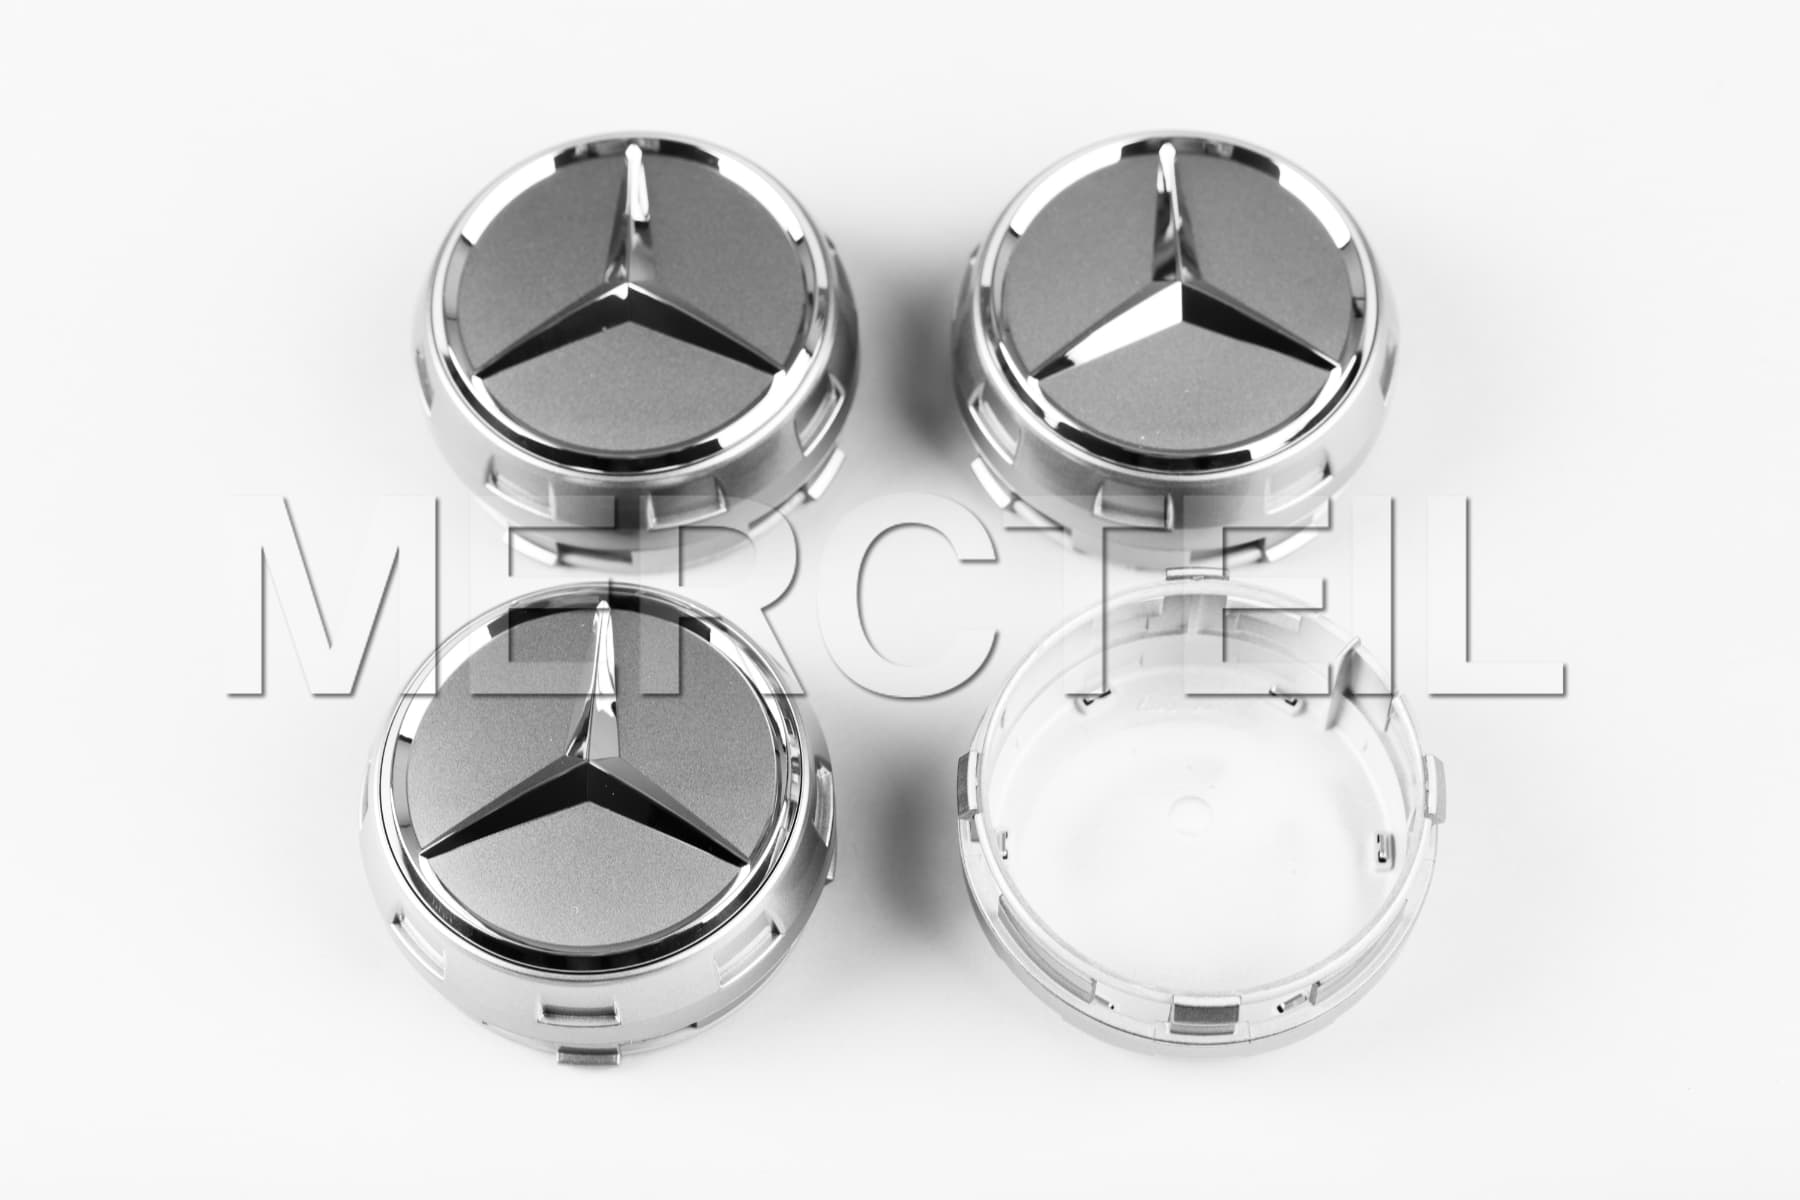 Mercedes Gray Wheel Caps Center Lock Design Genuine Mercedes Benz (part number: A00040009009790)